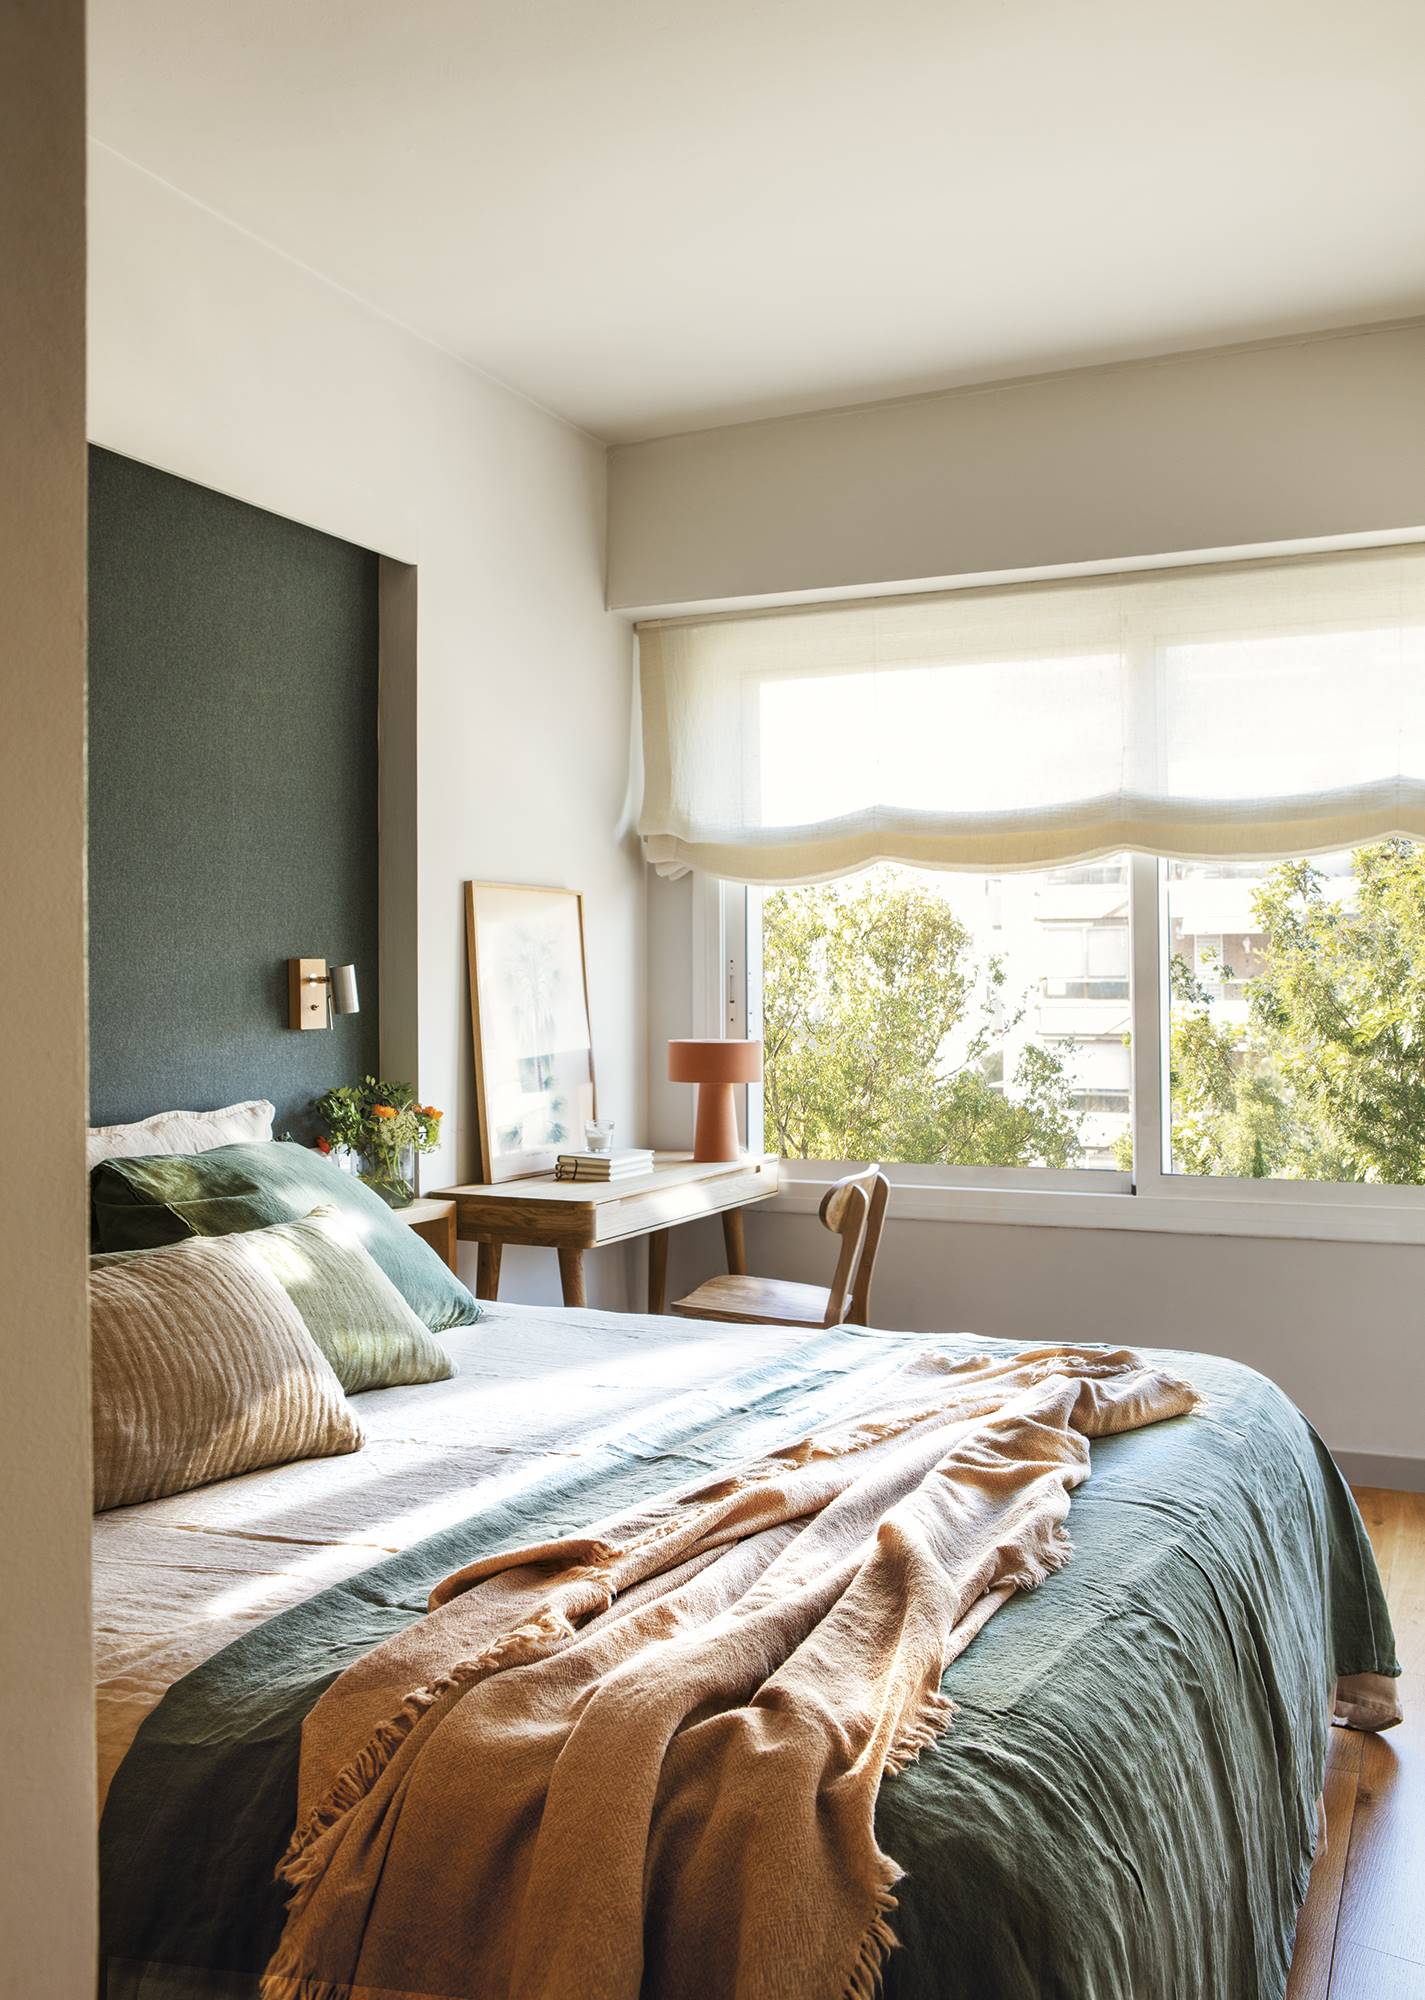 Dormitorio con cabecero decorado con papel pintado azul oscuro, textiles verdes y escritorio de madera.